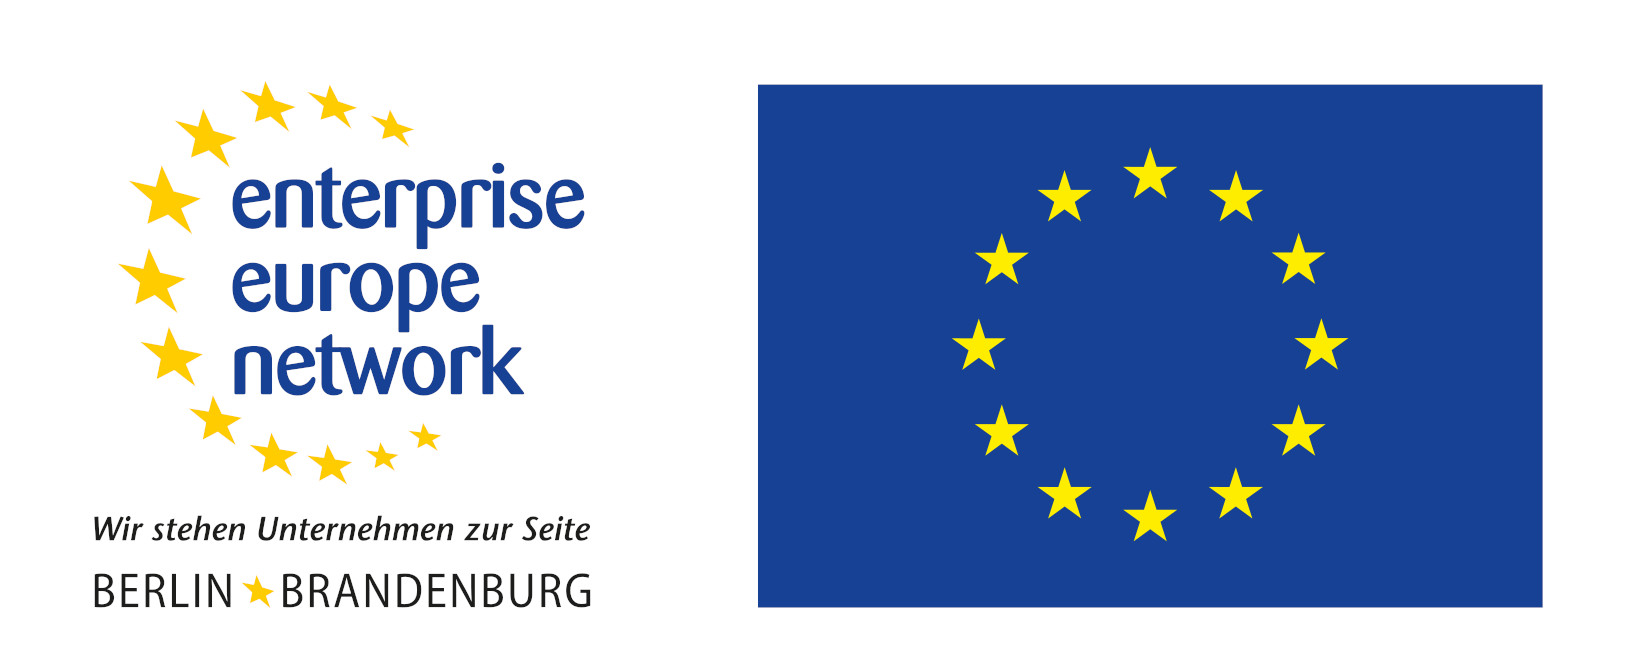 Enterprise Europe Network und EU Logo